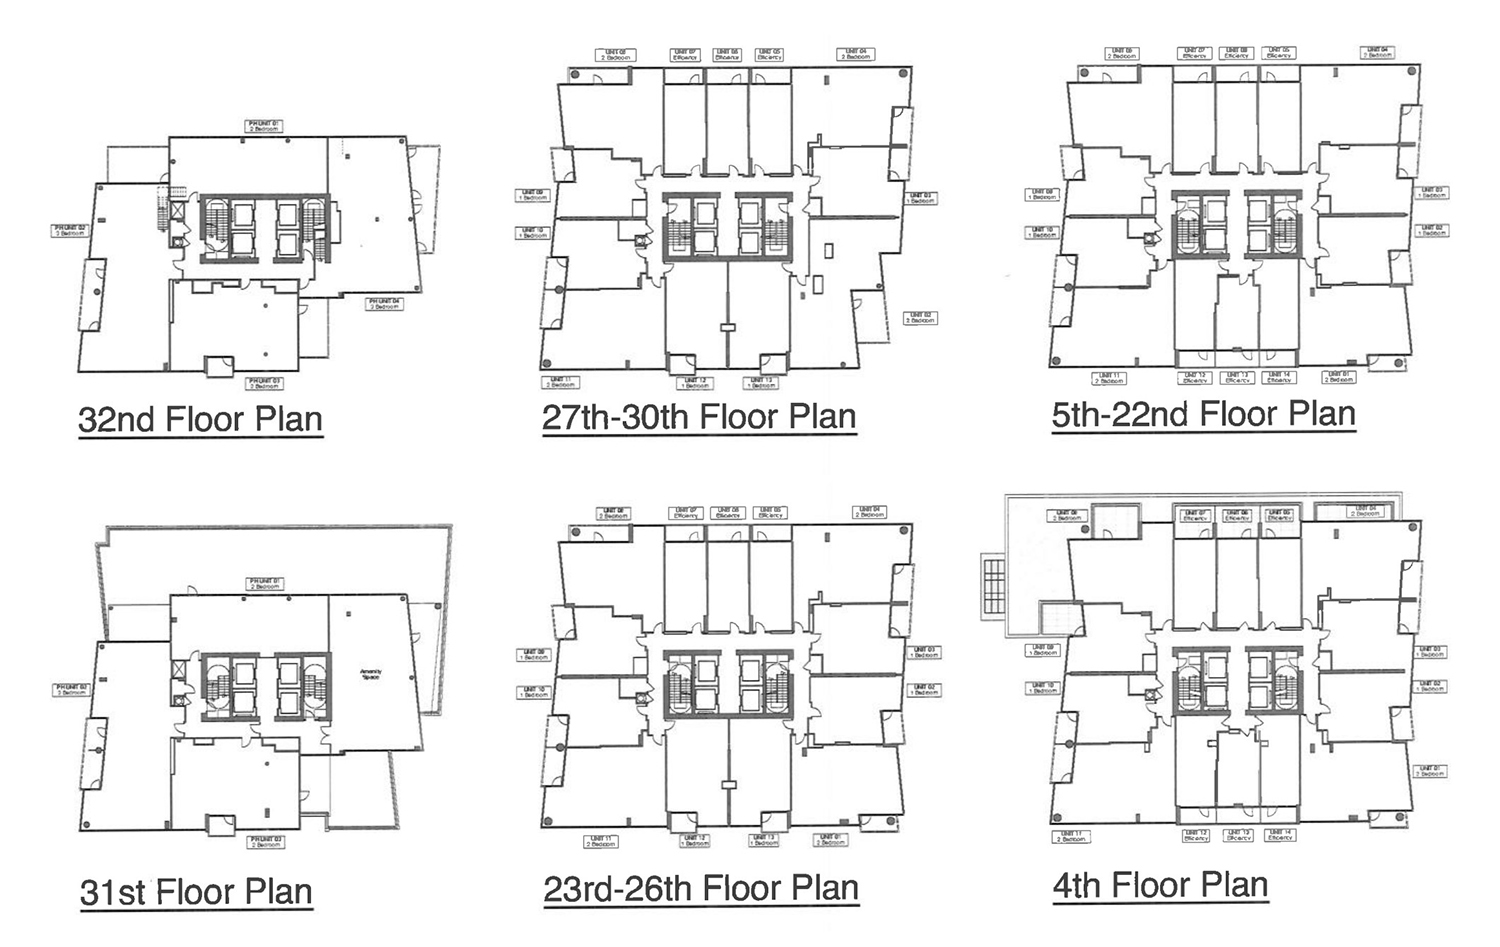 354 N Union Avenue typical floor plans